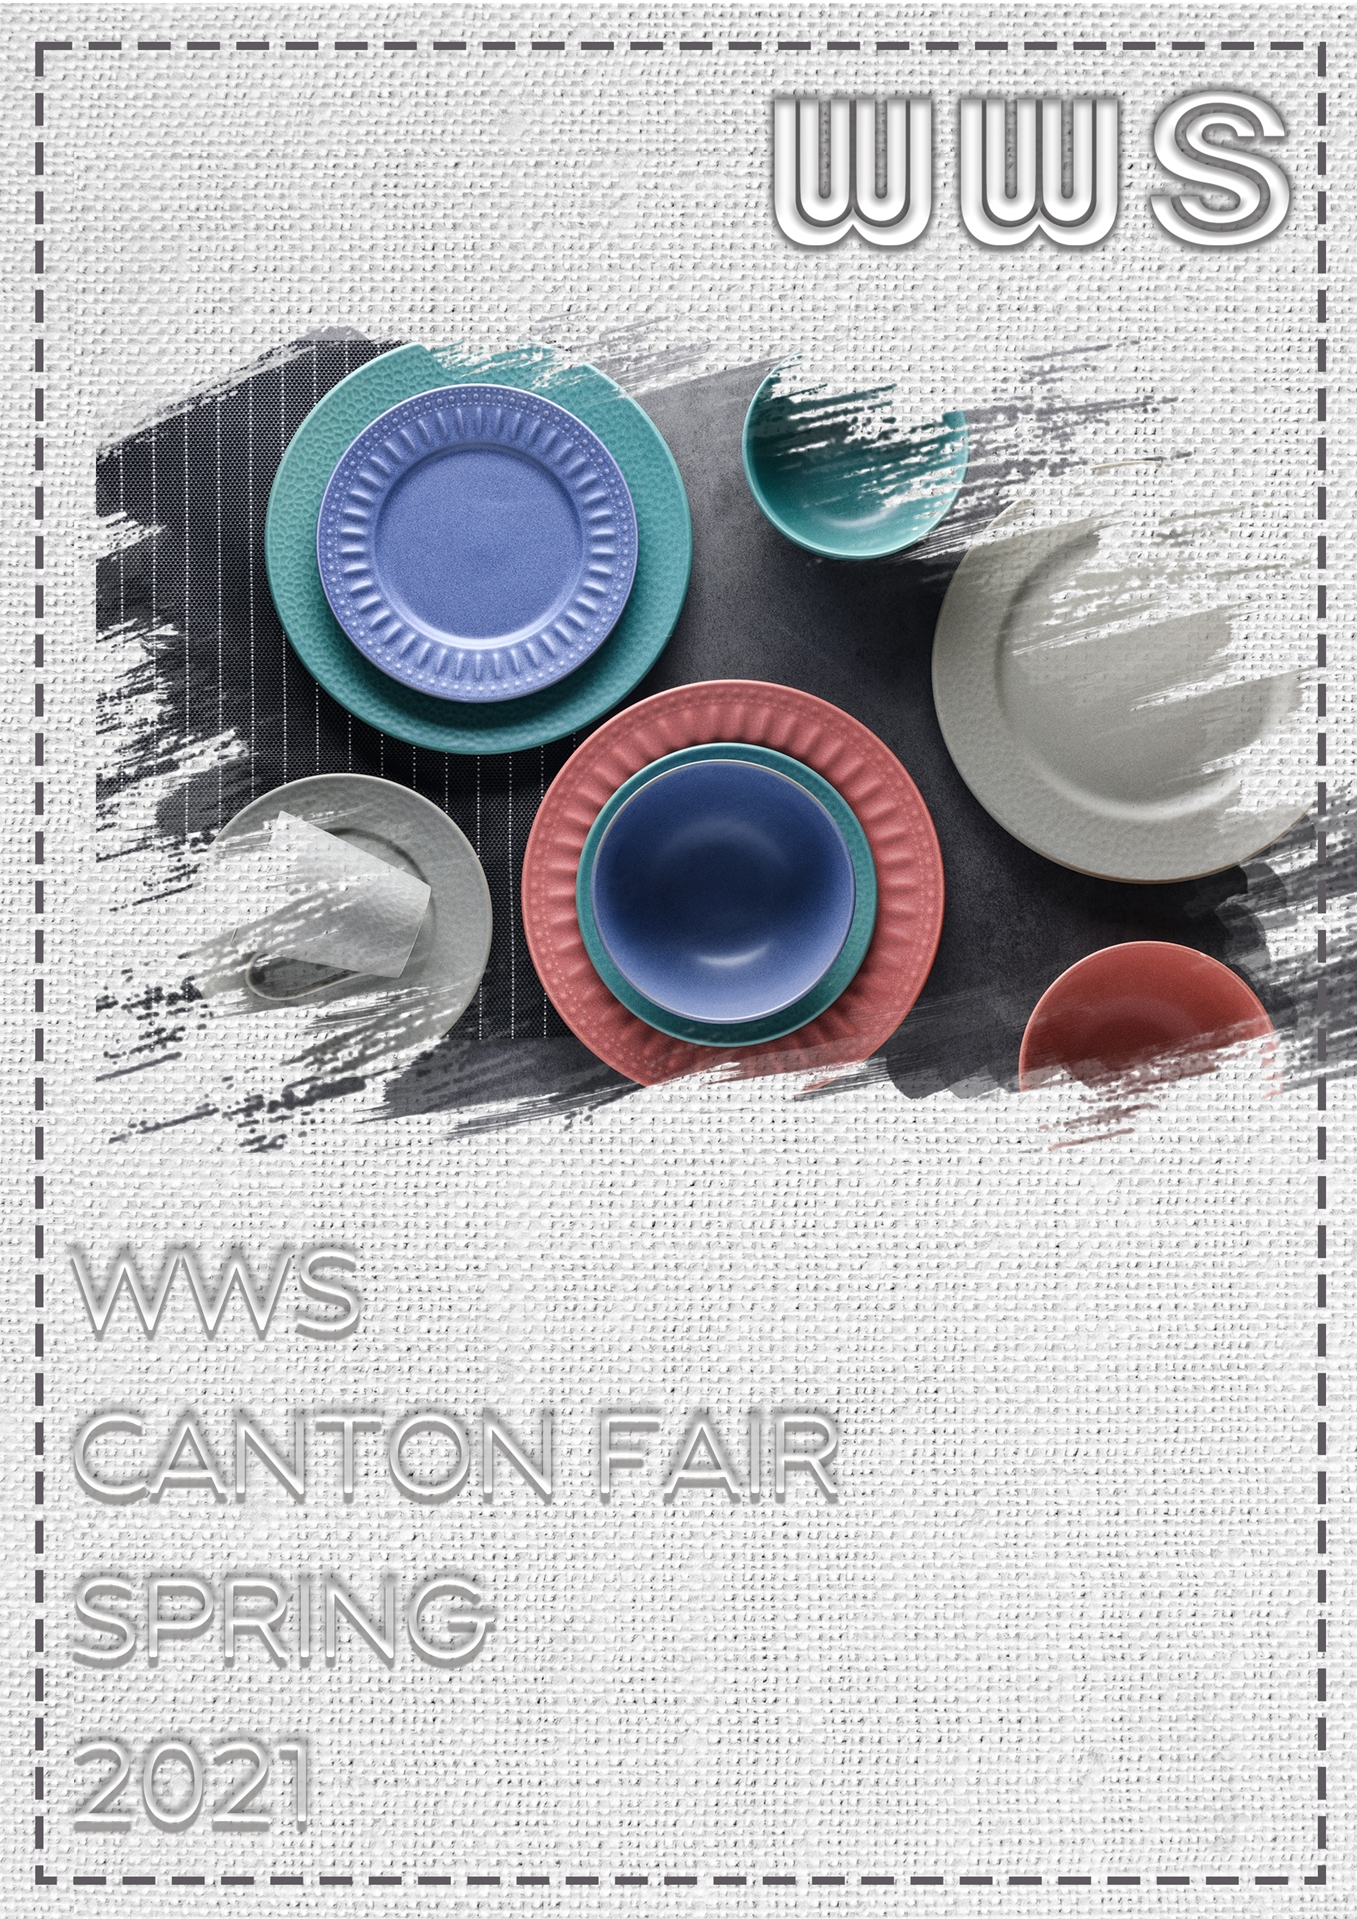 2021 canton fair wws ceramic